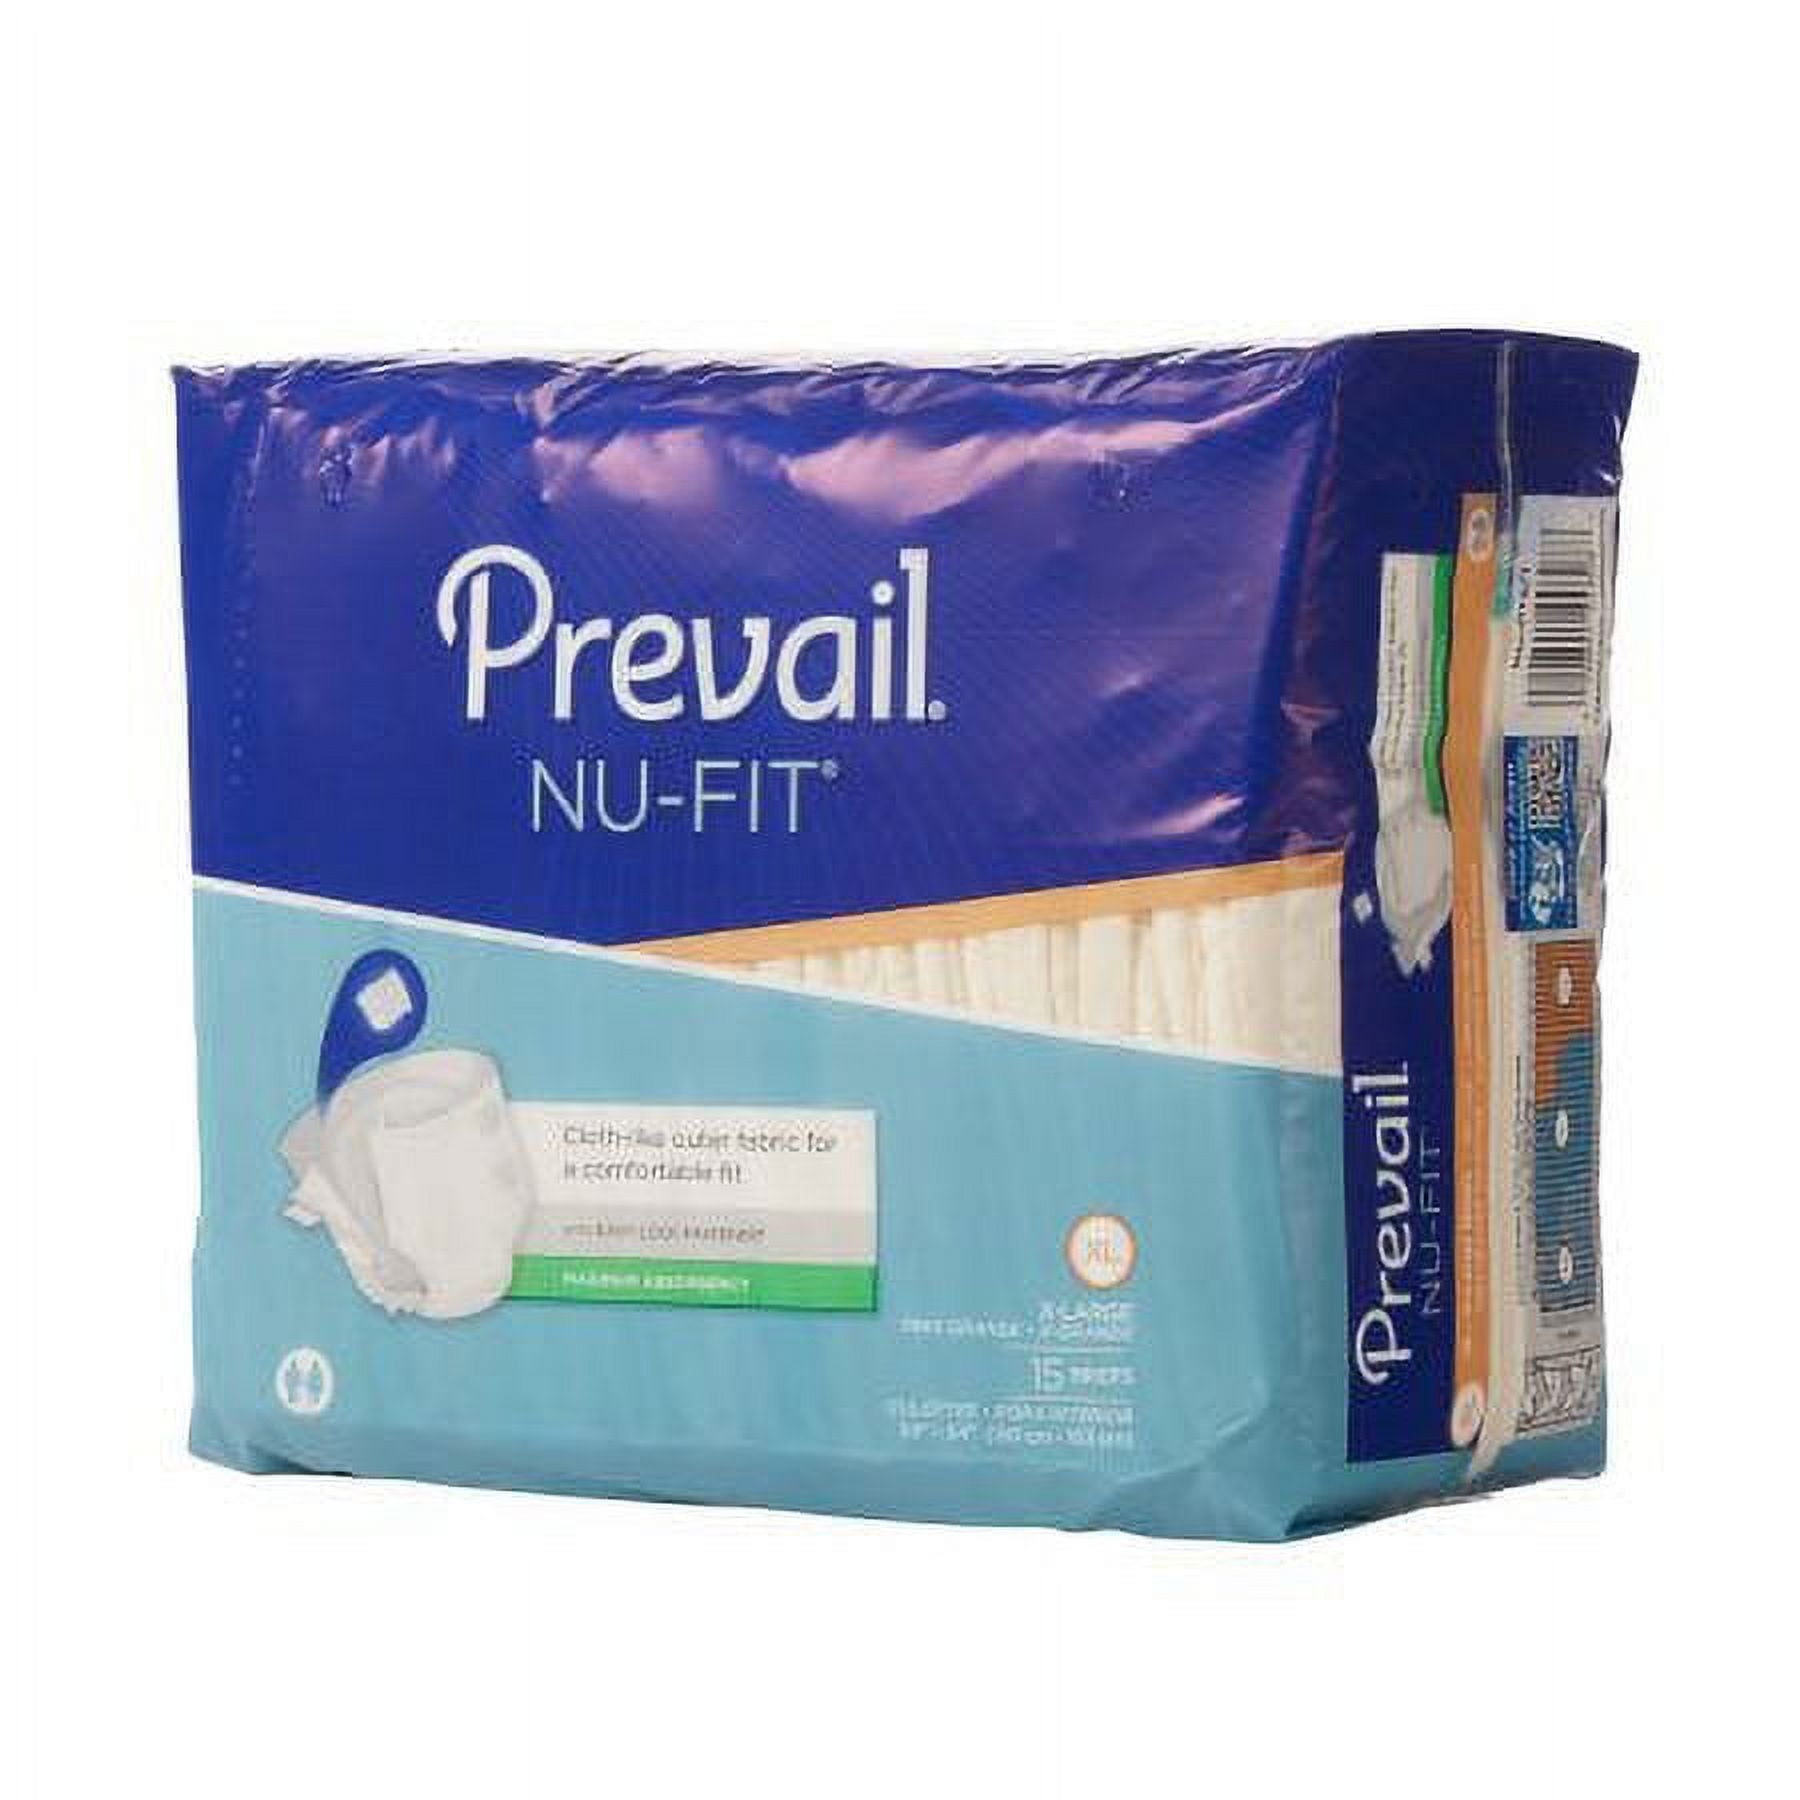 Prevail Nu-Fit Adult Briefs PK/15 ''X-Large, 59 - 64 , 15 Count'' 2 Pack